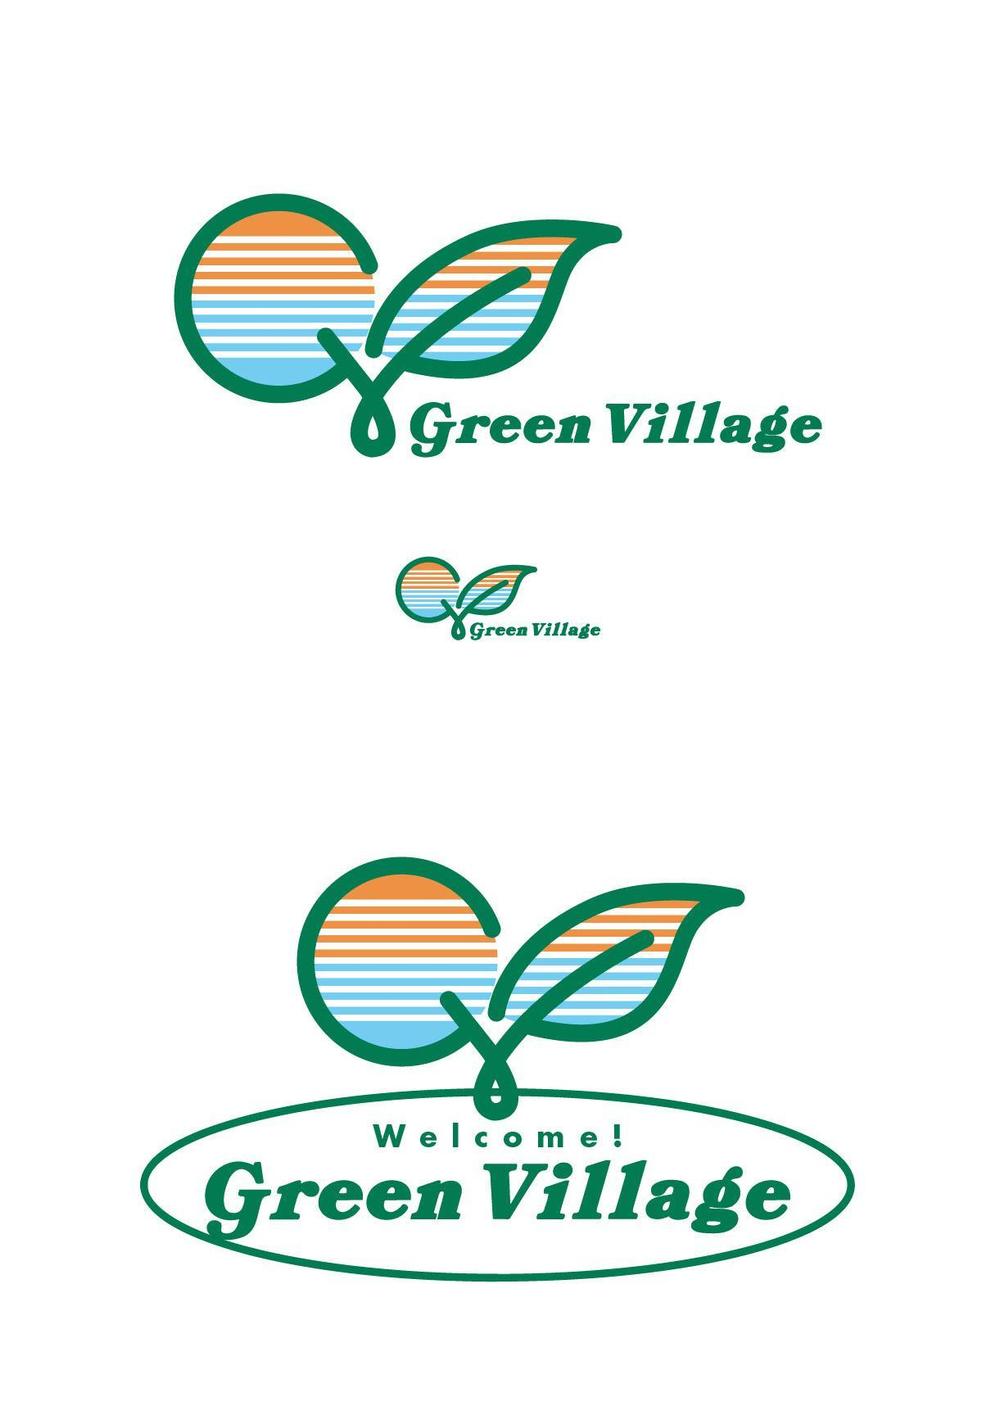 GV_logo.jpg